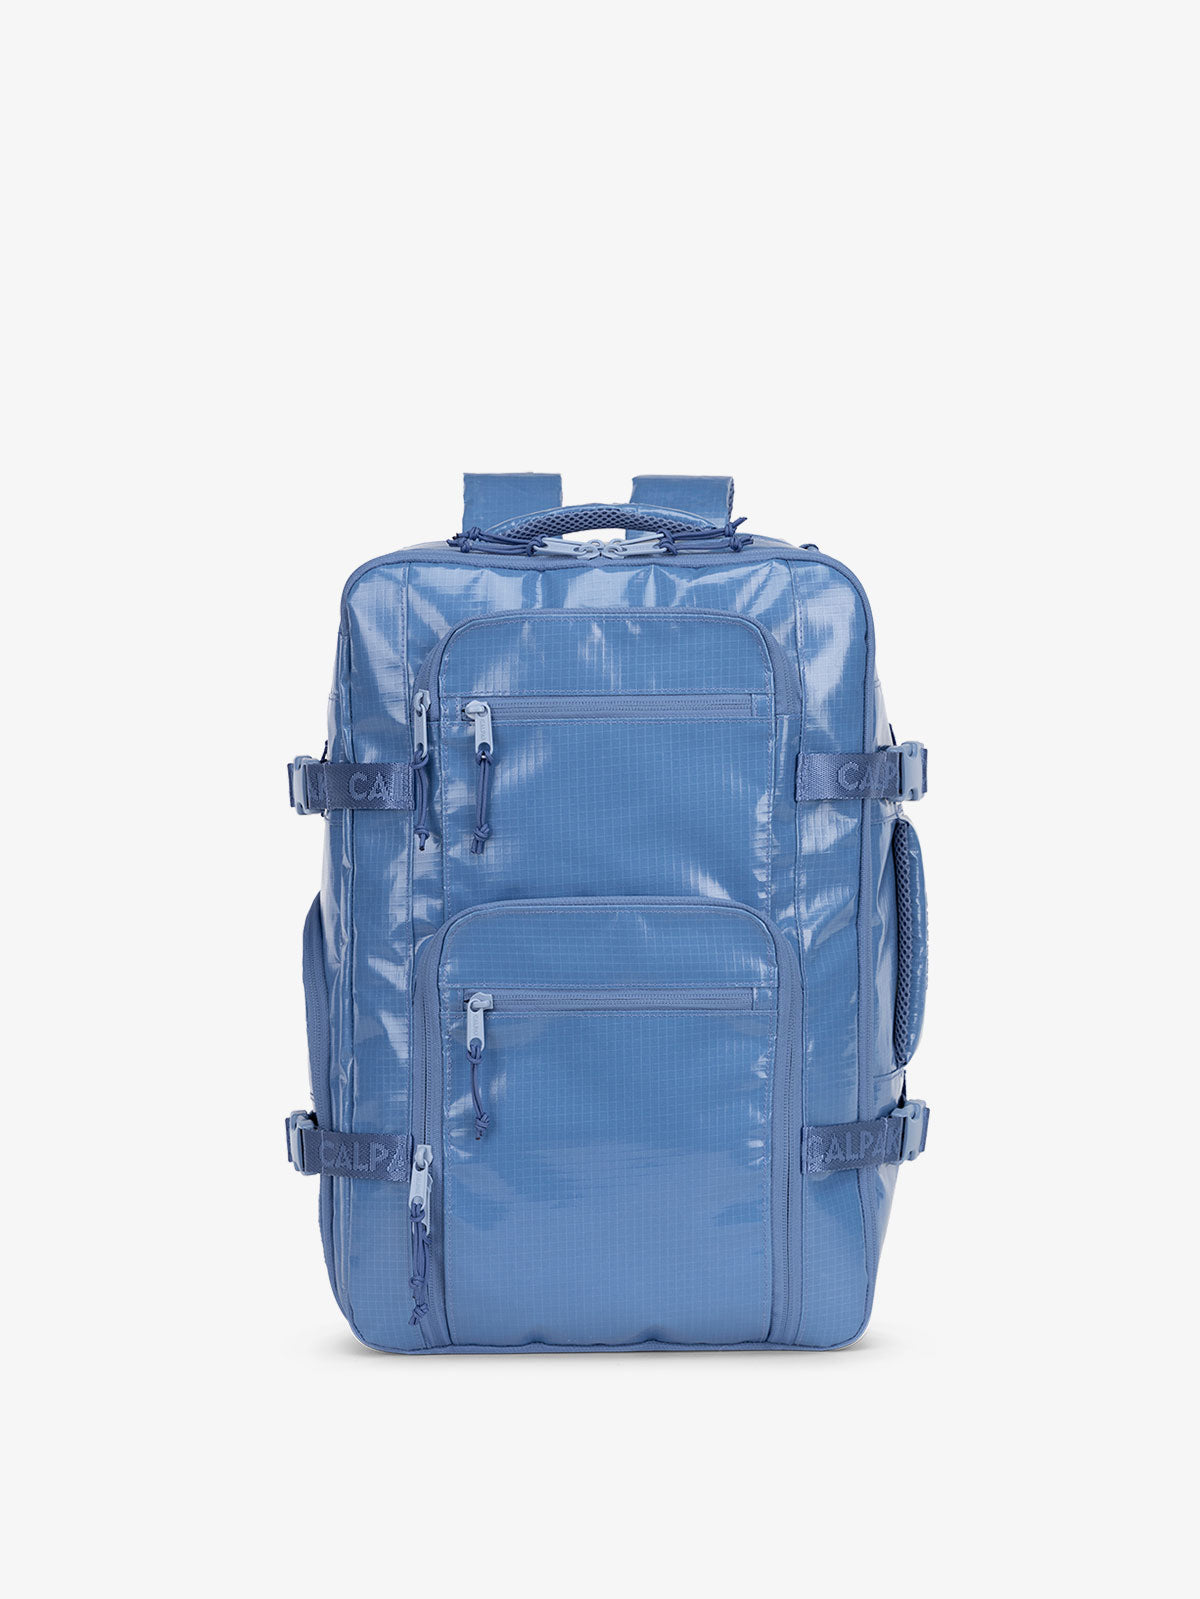 CALPAK Terra 26L laptop backpack duffel